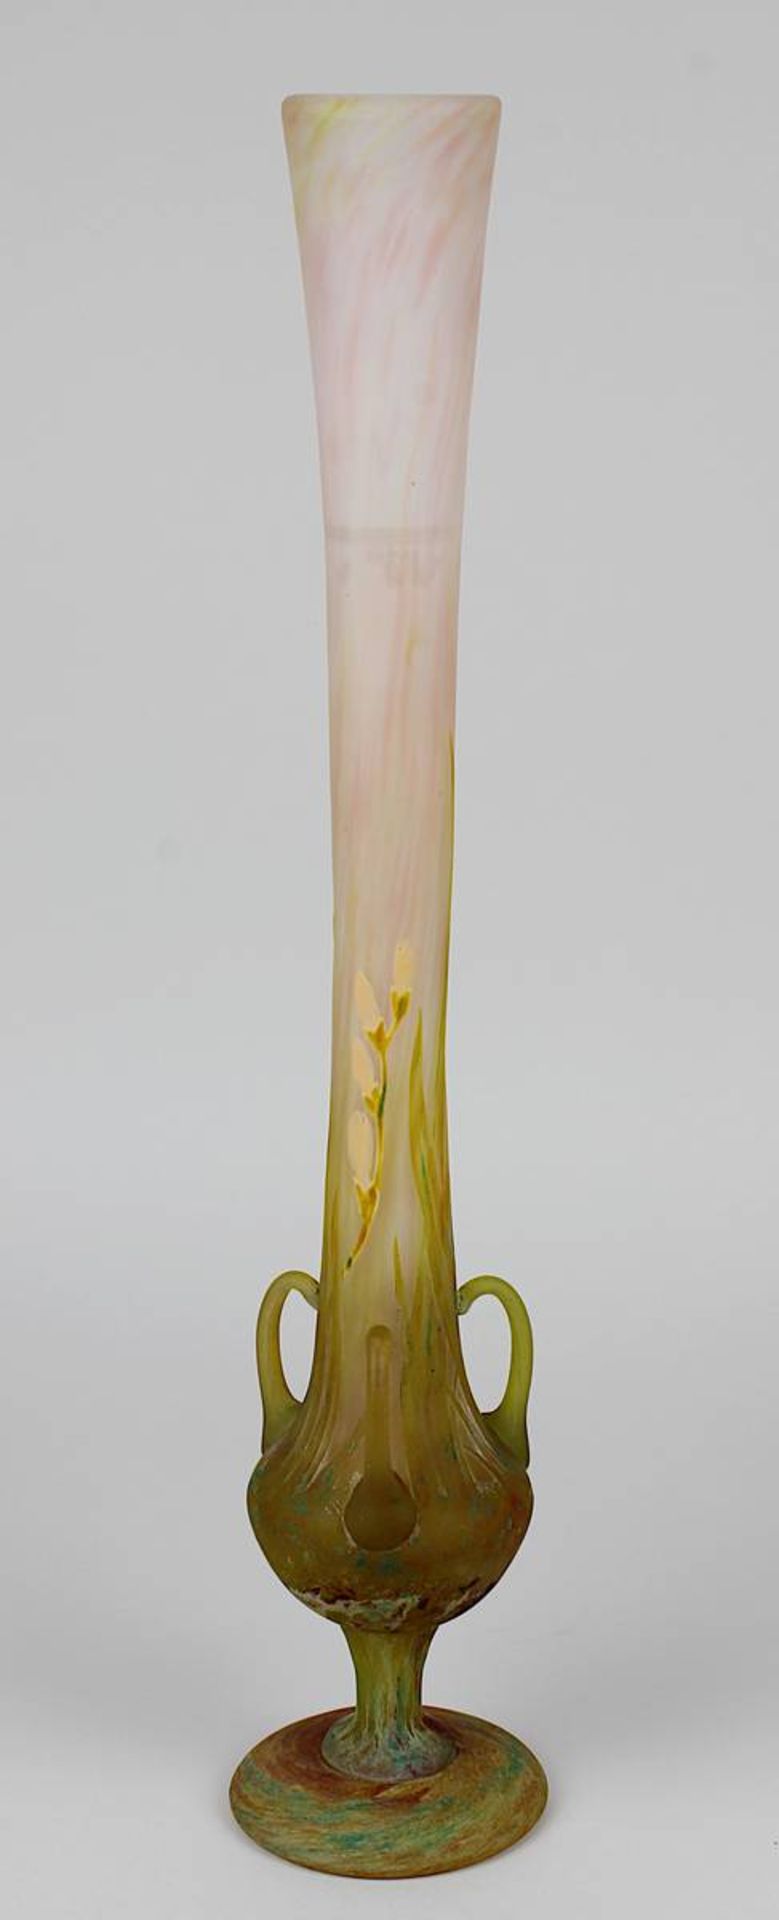 Daum Jugendstil-Vase Freesias, Nancy 1910 - 12, Entwurf wohl Henry Bergér, Luxusglas-Serie, Modell - Bild 9 aus 12